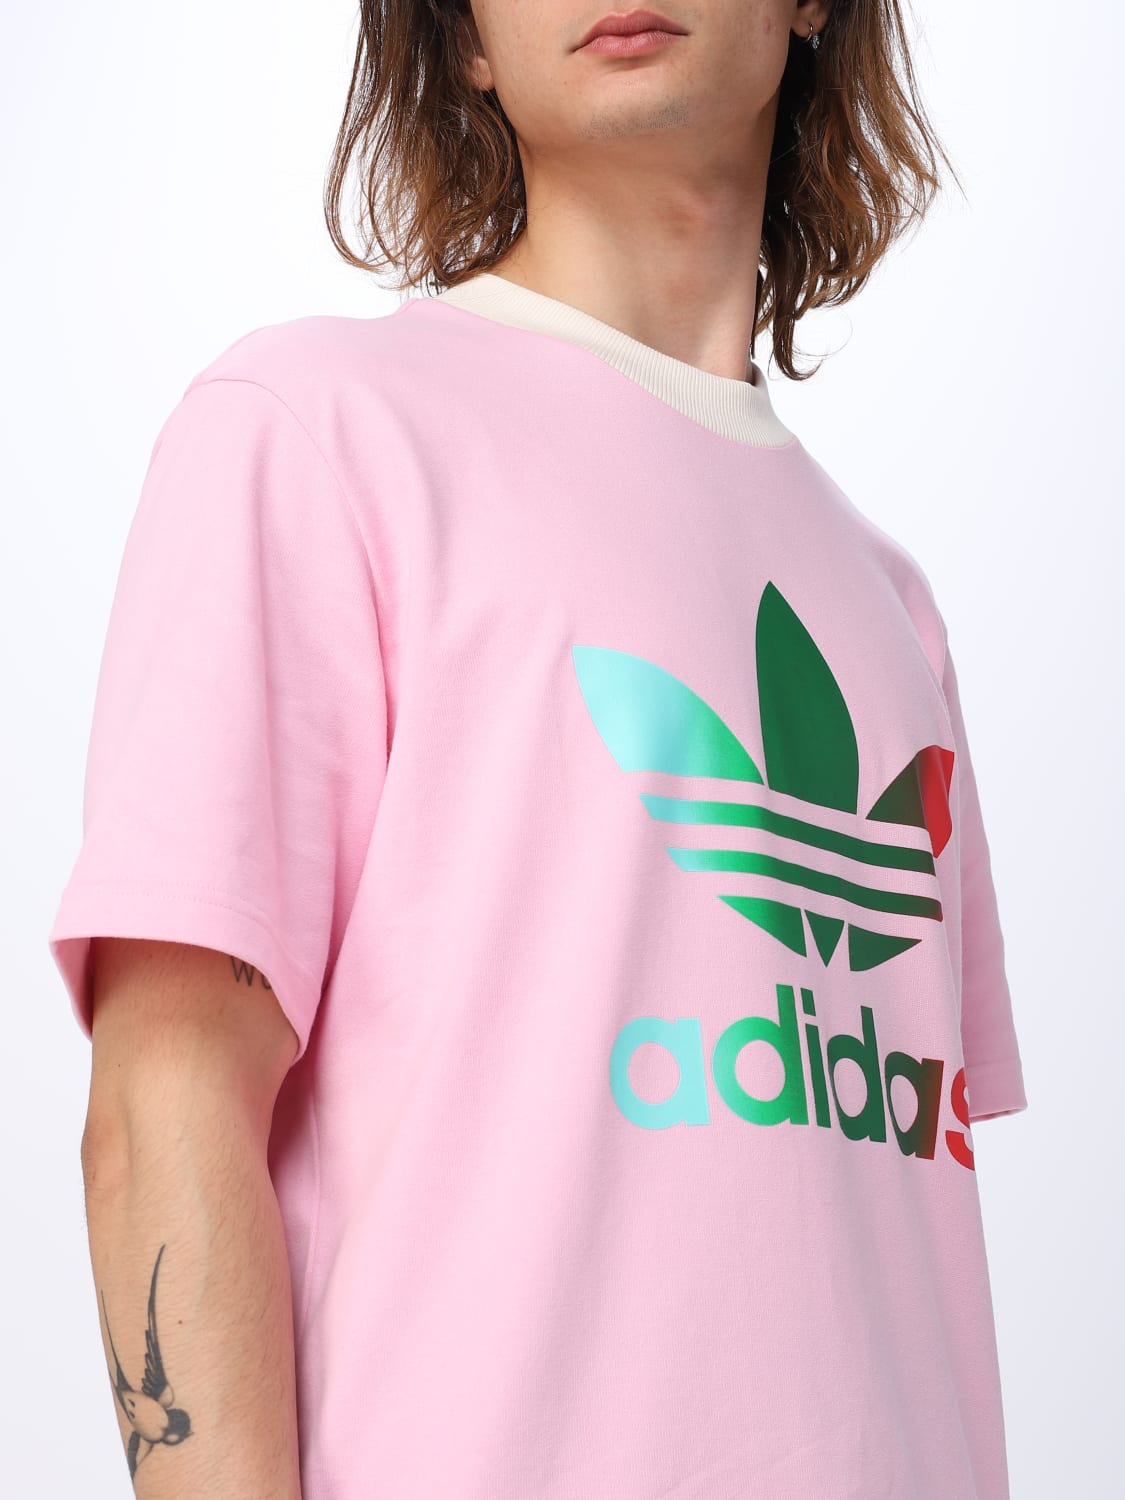 Adidas Originals Outlet: t-shirt for men - Pink | Adidas Originals t-shirt  IP6968 online at GIGLIO.COM